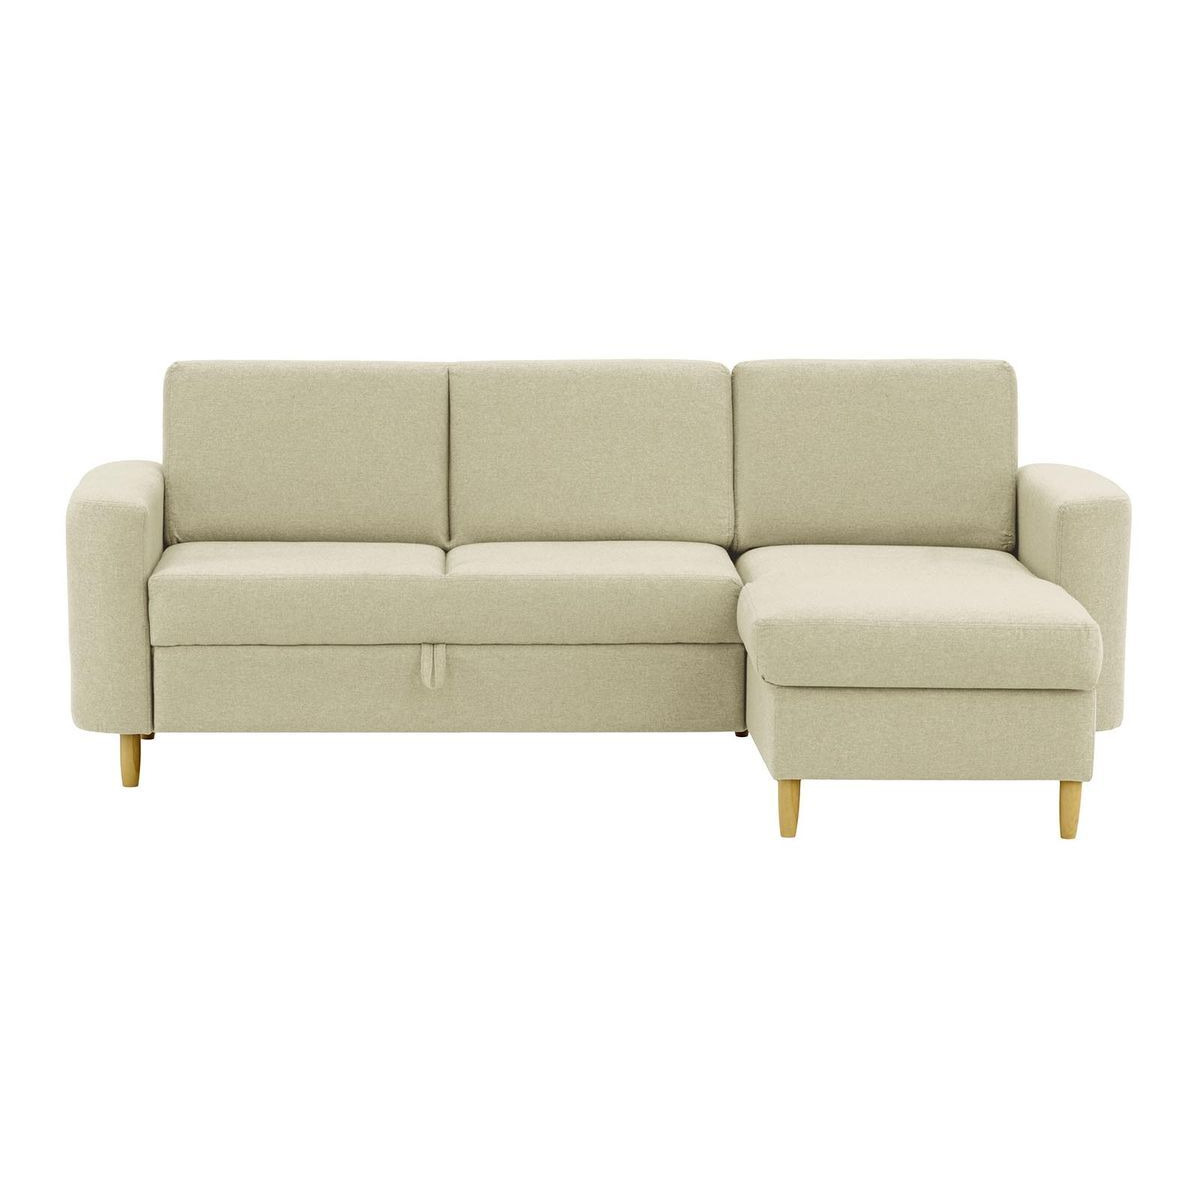 Elegance Corner Sofa Bed With Storage, cream - image 1